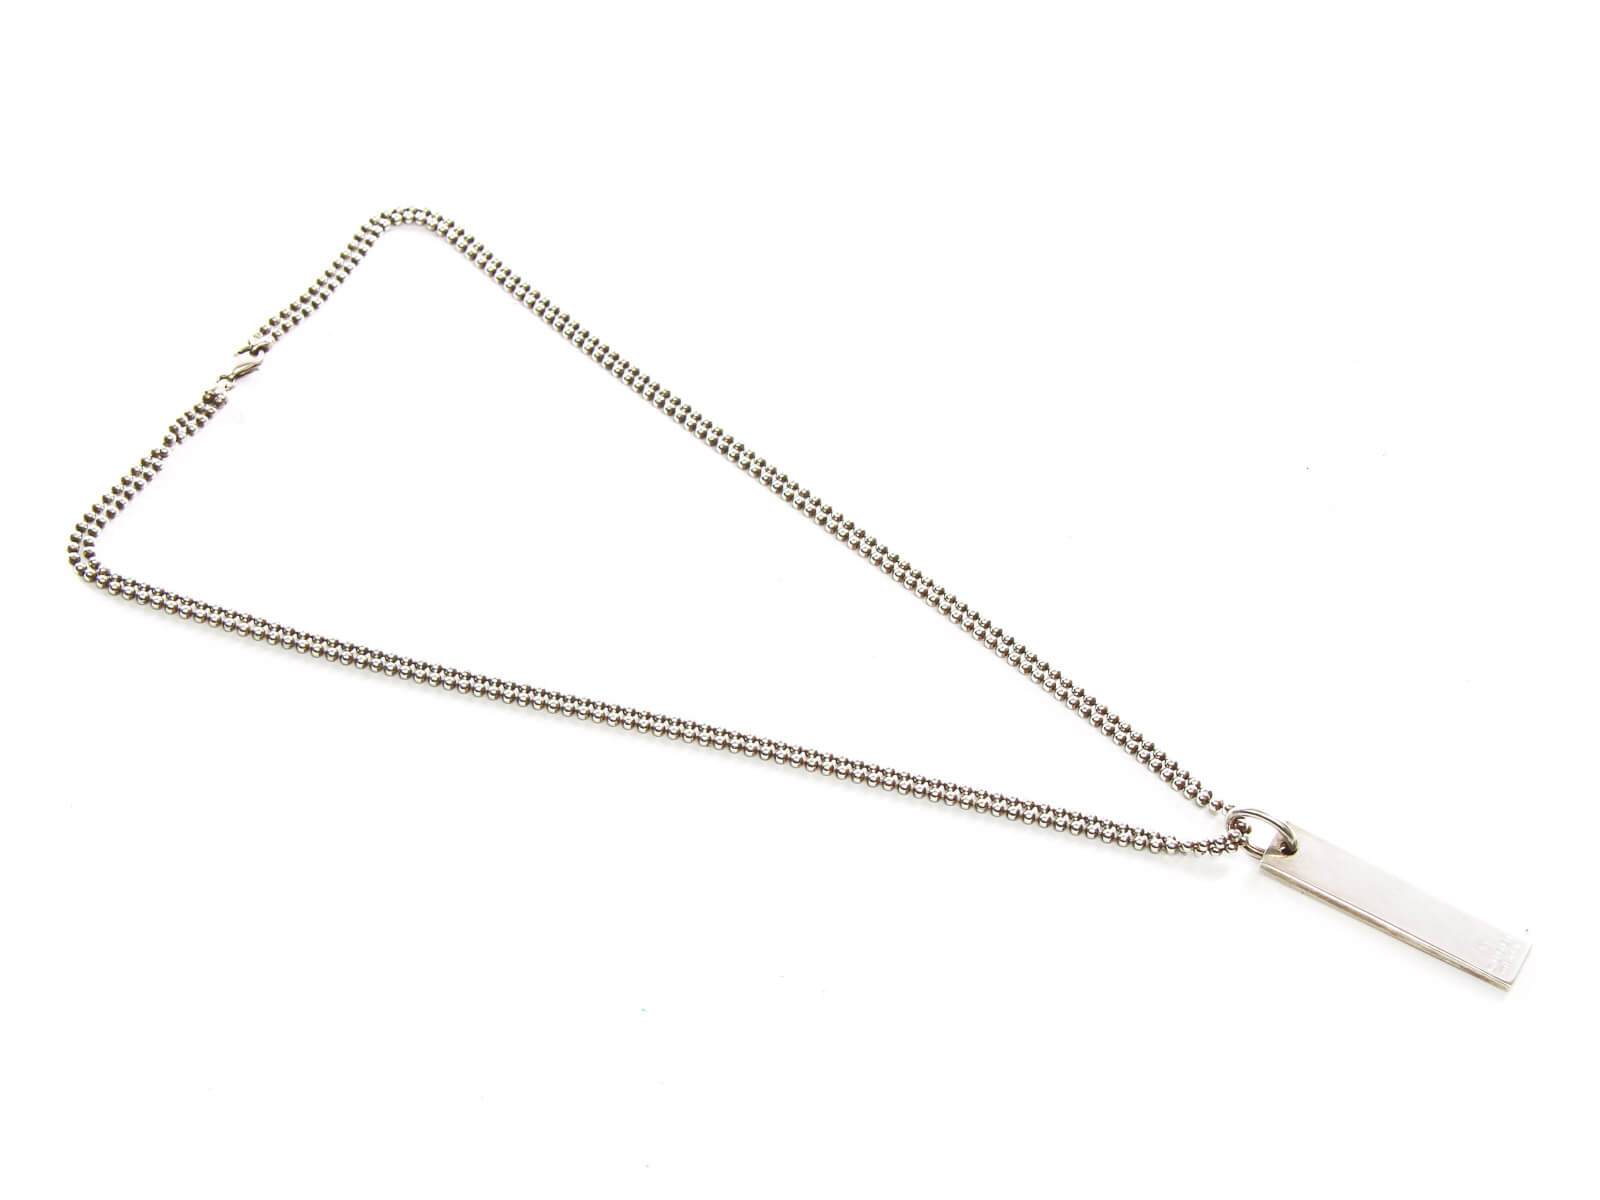 Authentic Gucci 925 silver chain & pendant necklace | Connect 